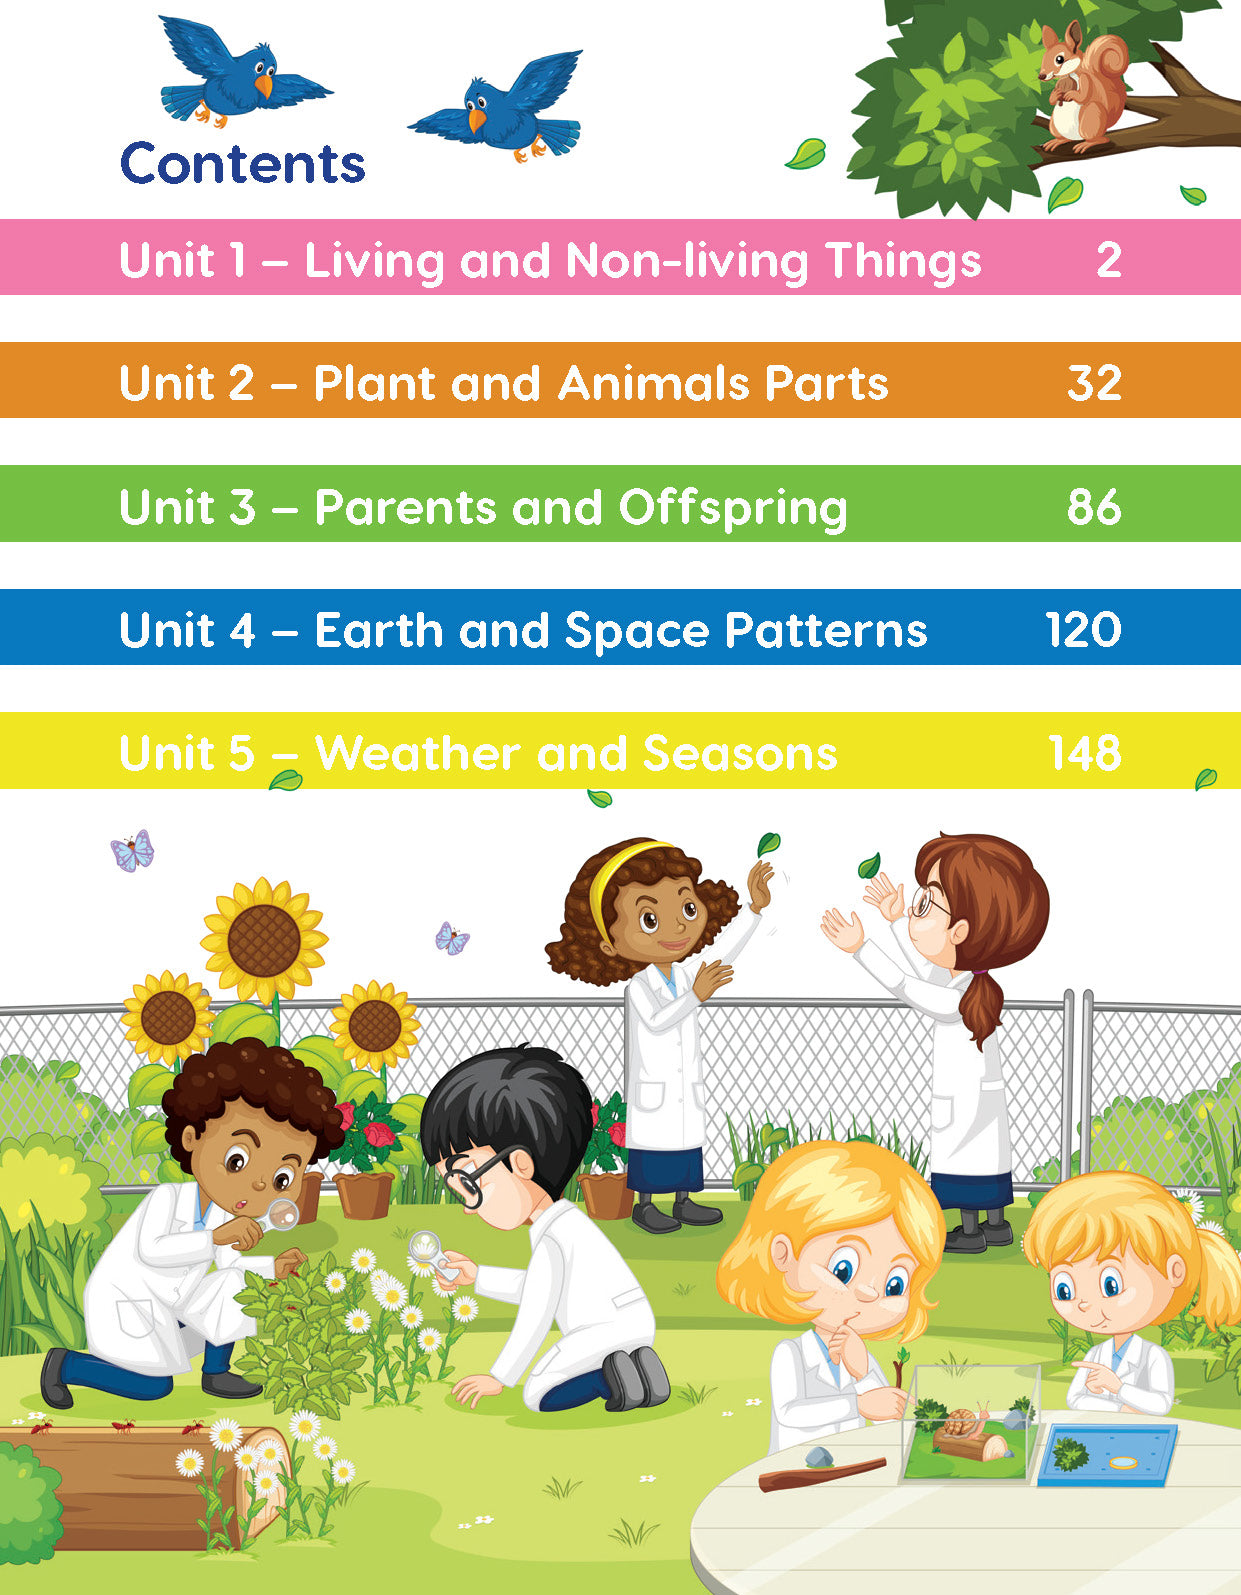 Next Generation Science Activity Book – Grade 1, Book A